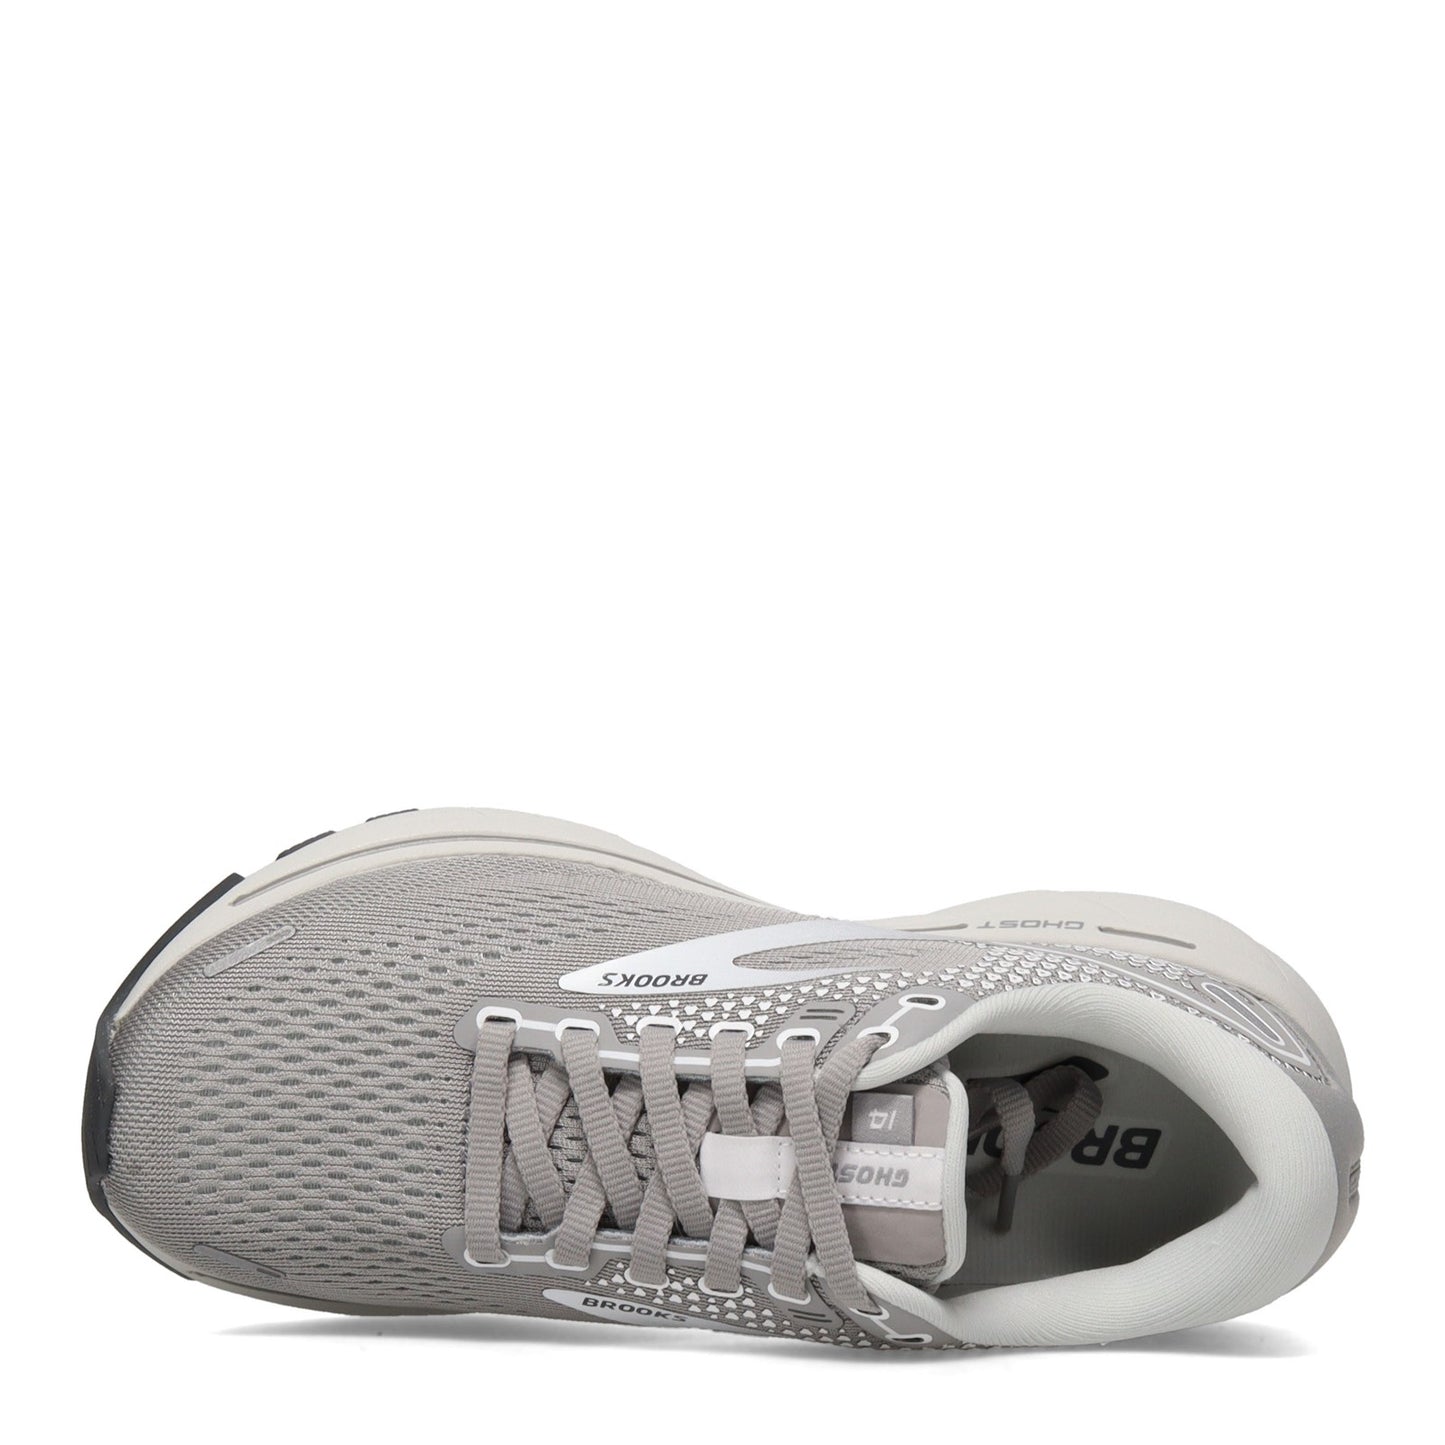 Peltz Shoes  Women's Brooks Ghost 14 Running Shoe Alloy/Grey/Oyster 120356 1B 089